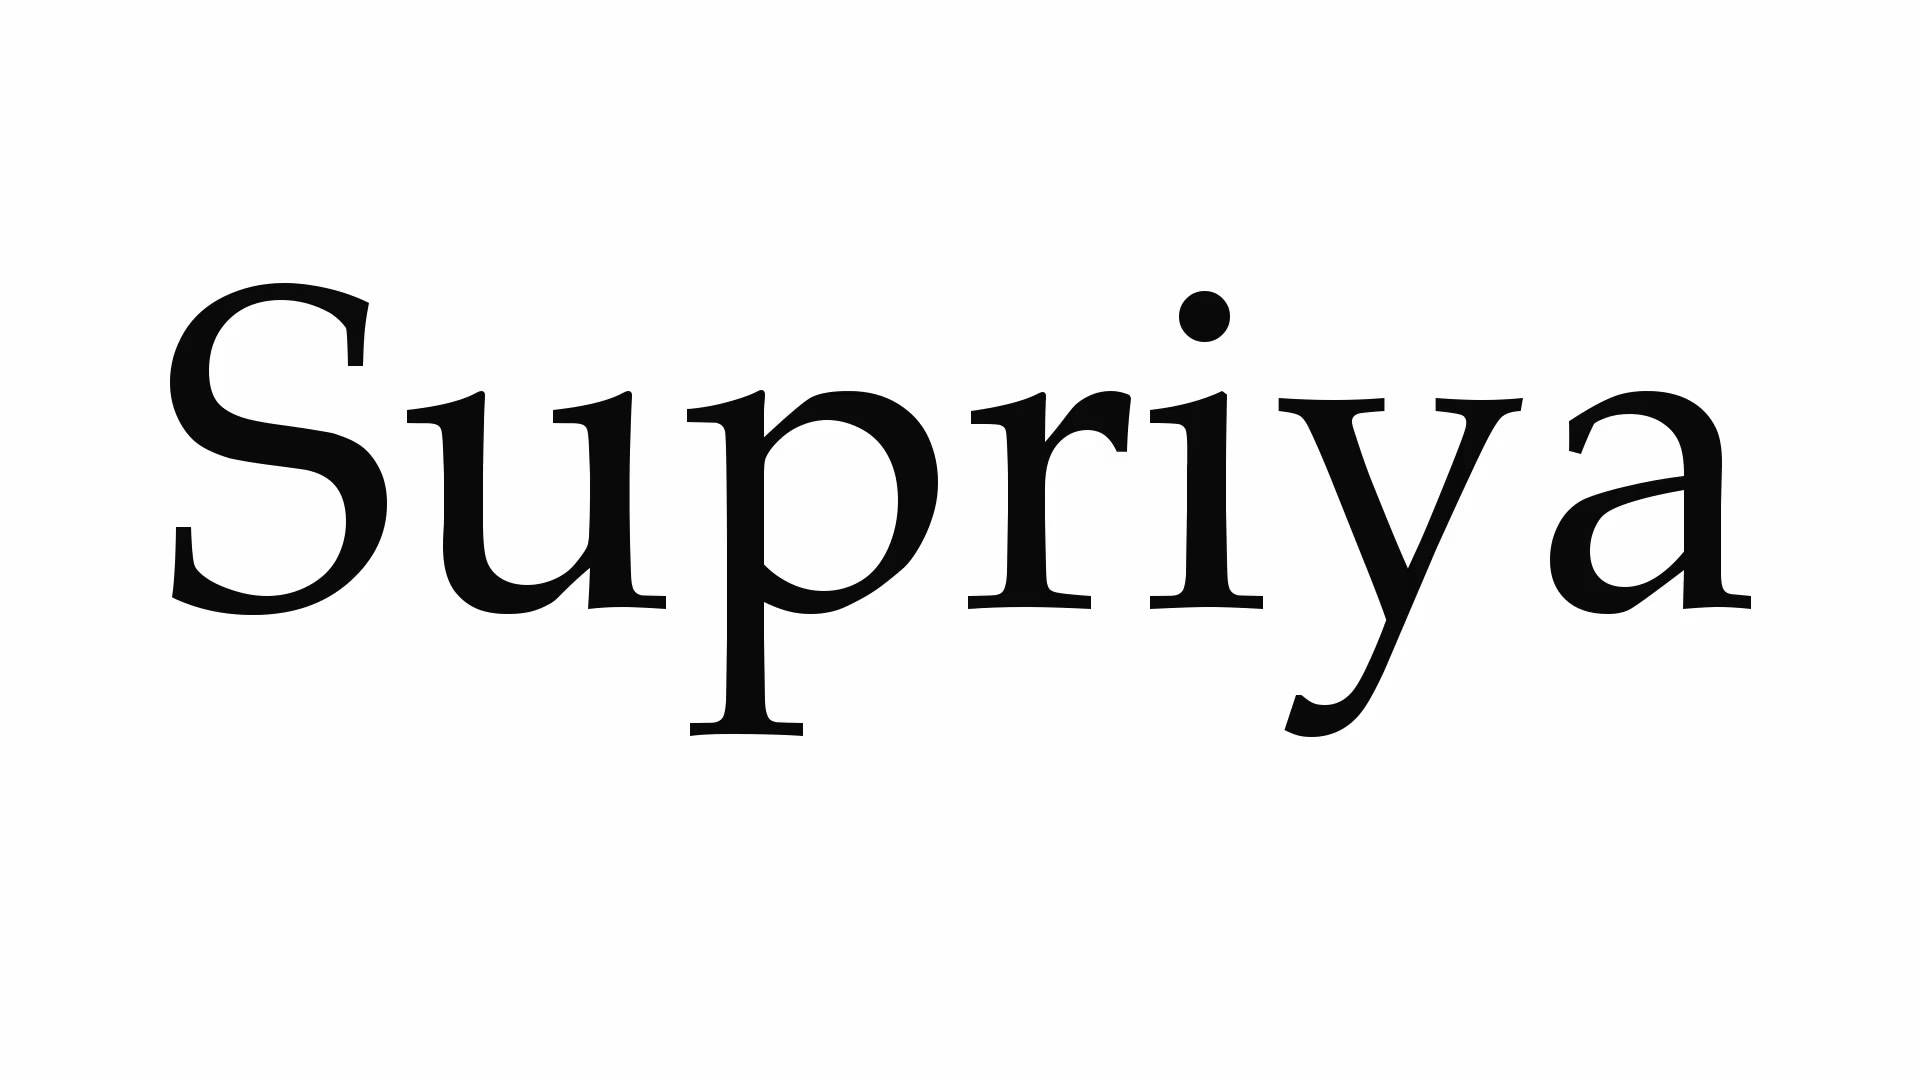 How to Pronounce Supriya - YouTube